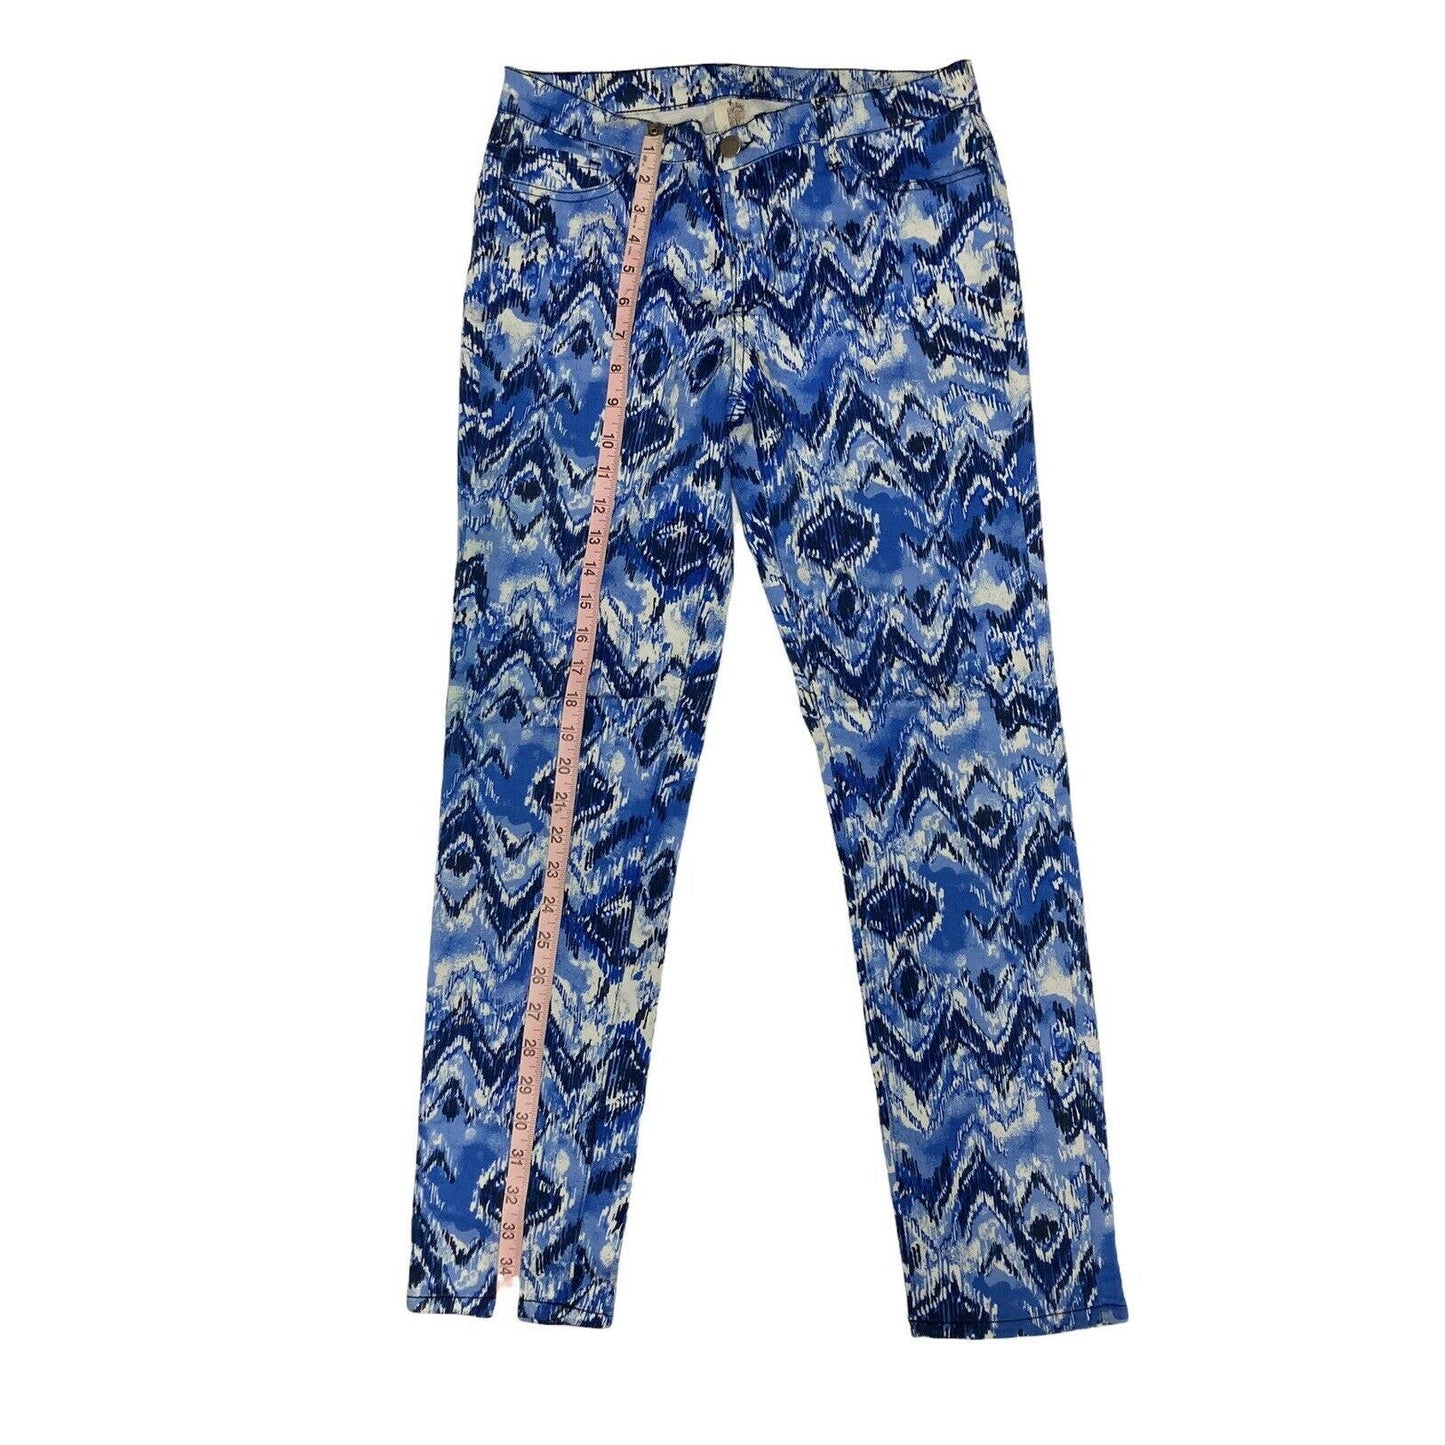 Francesca’s Collection Ikat Blue White Skinny Pants Size 29 Style FR001T2